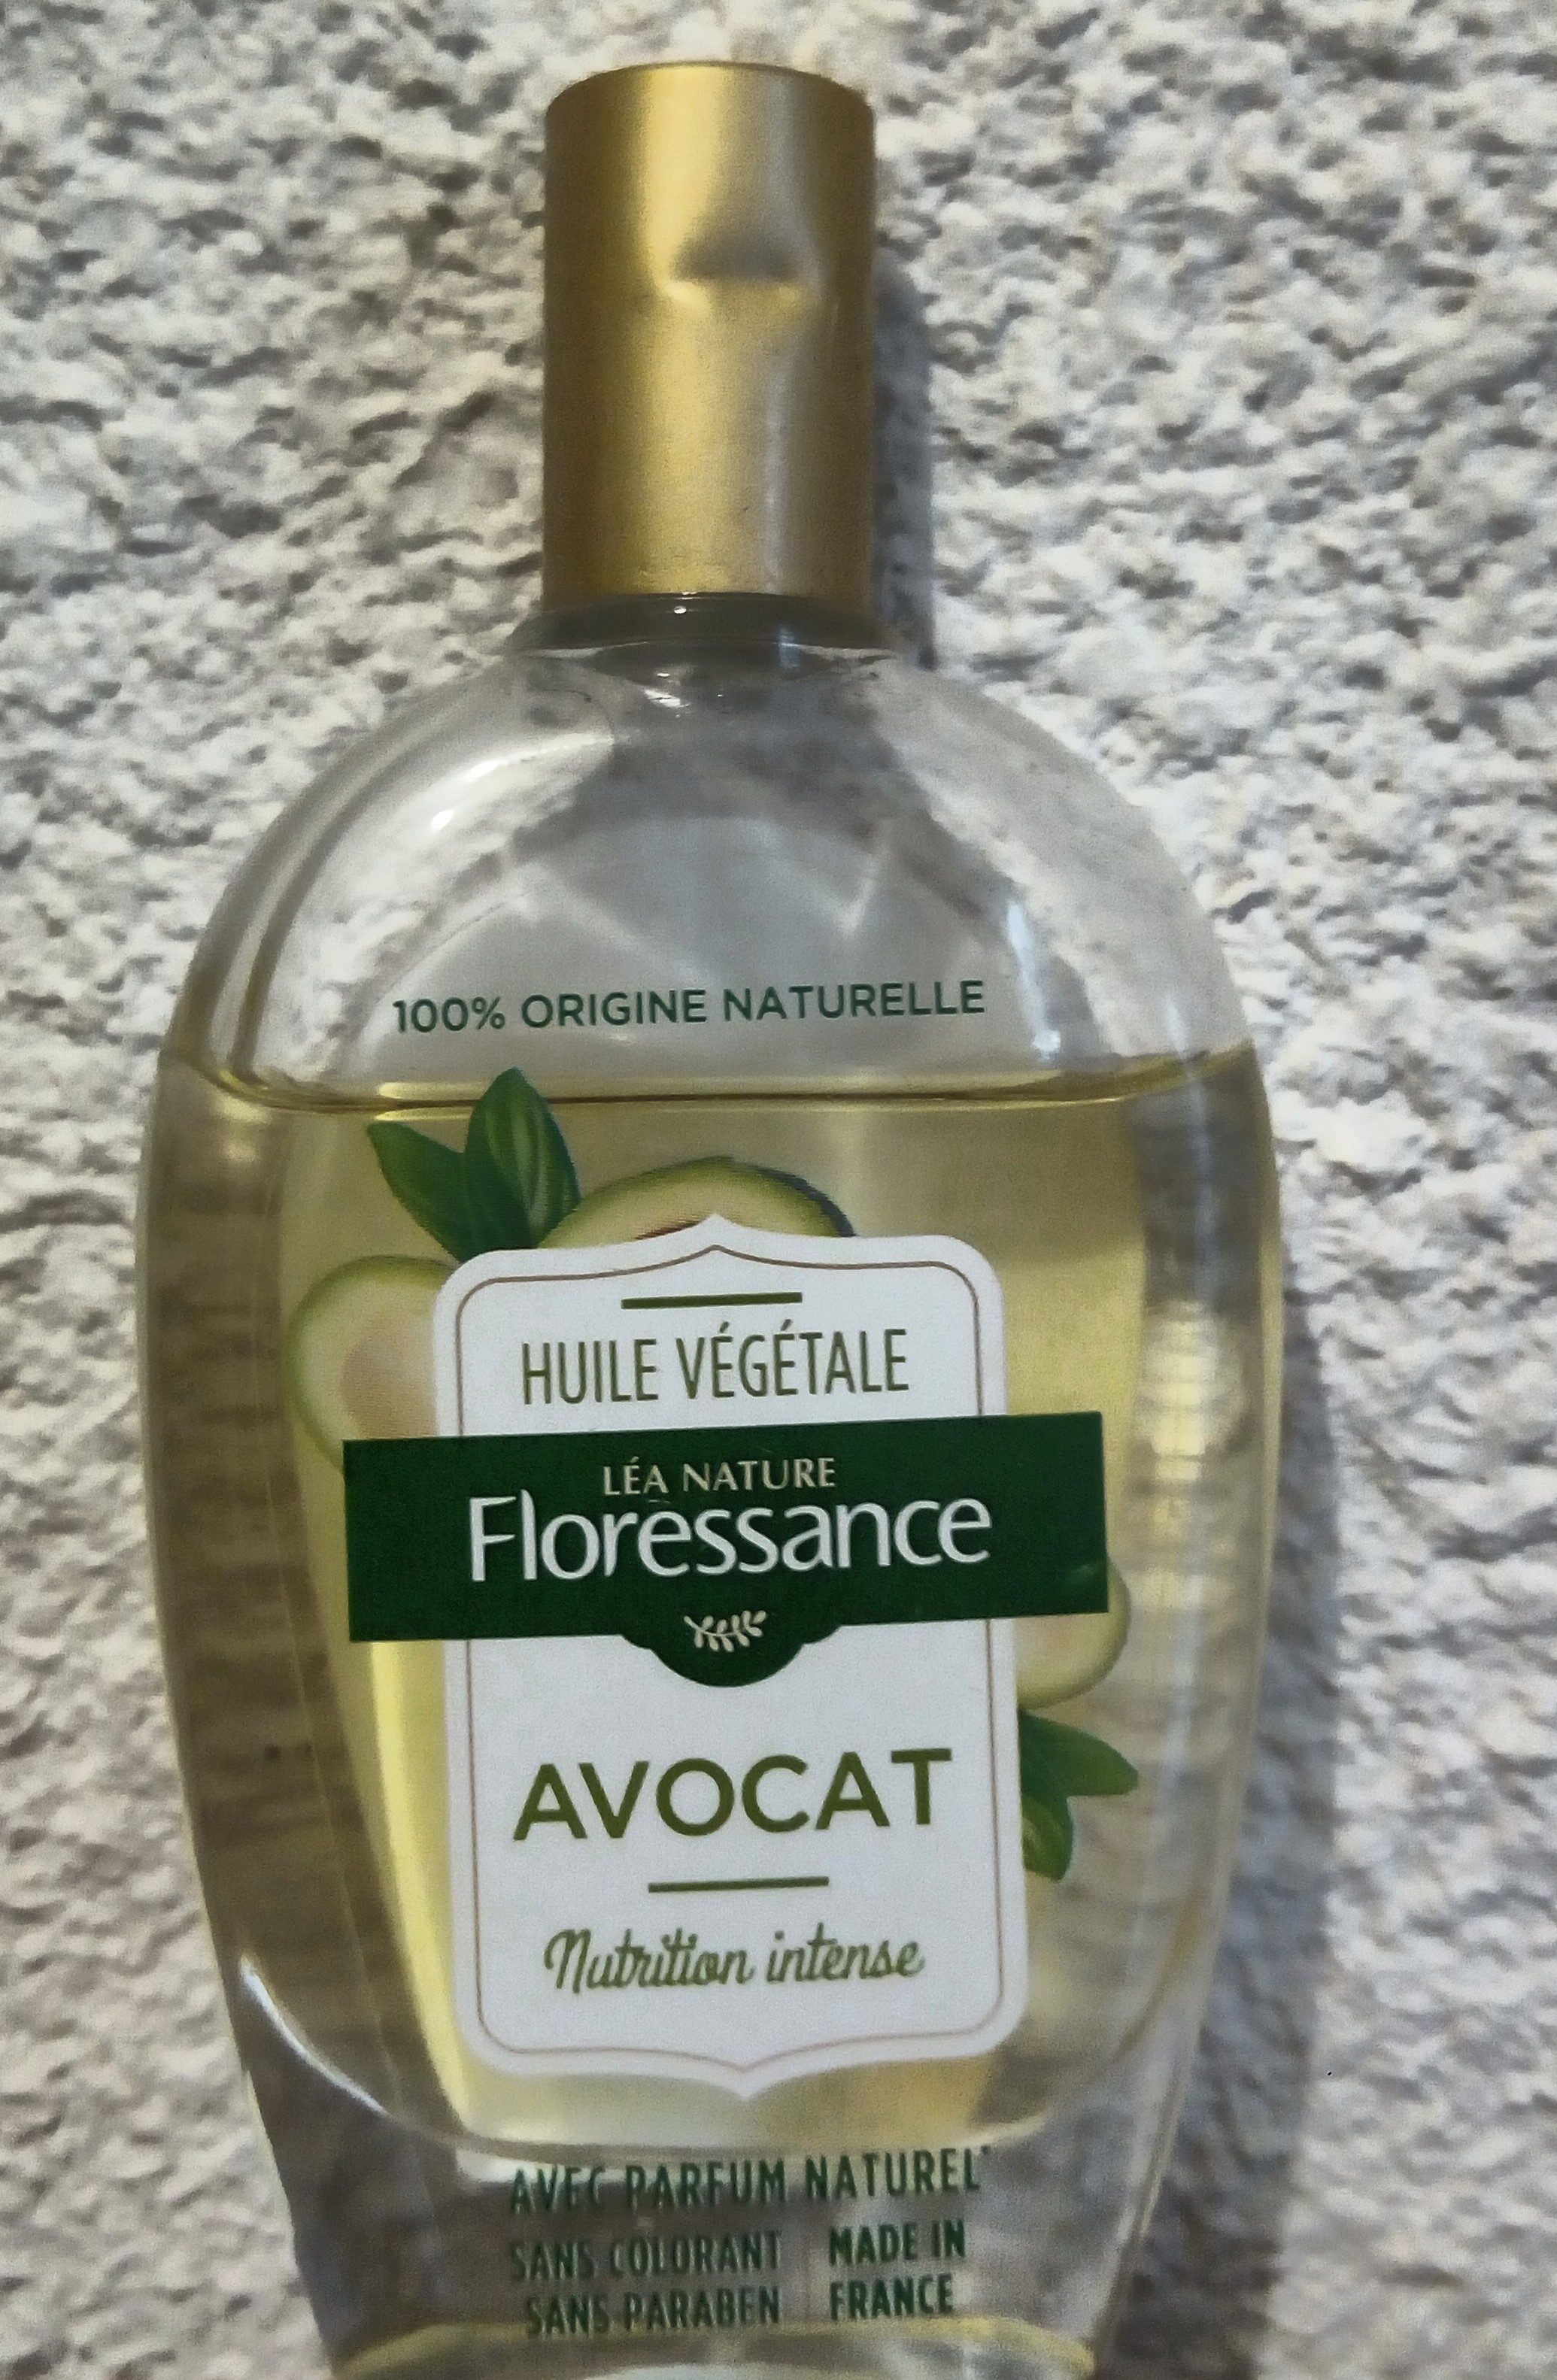 Huile 100% naturelle Avocat - Product - fr